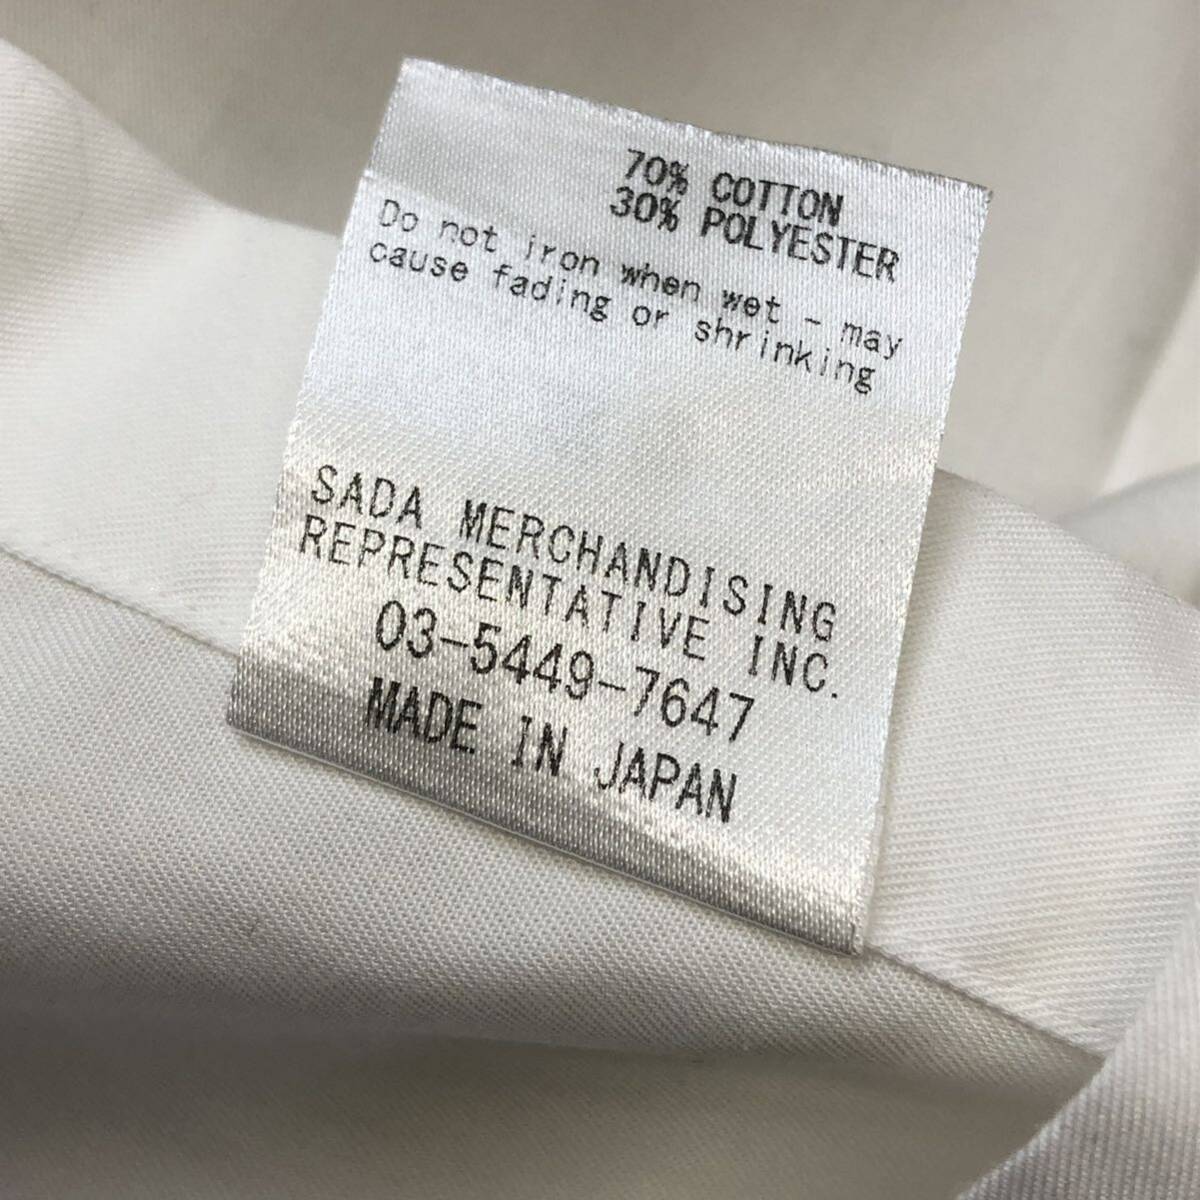 Maker's shirt鎌倉シャツ 長袖シャツ ドレスシャツ SLIM FIT TRAVELER 無地シャツ ホワイト 39-83 15 1/2-32 1/2 古着の画像6